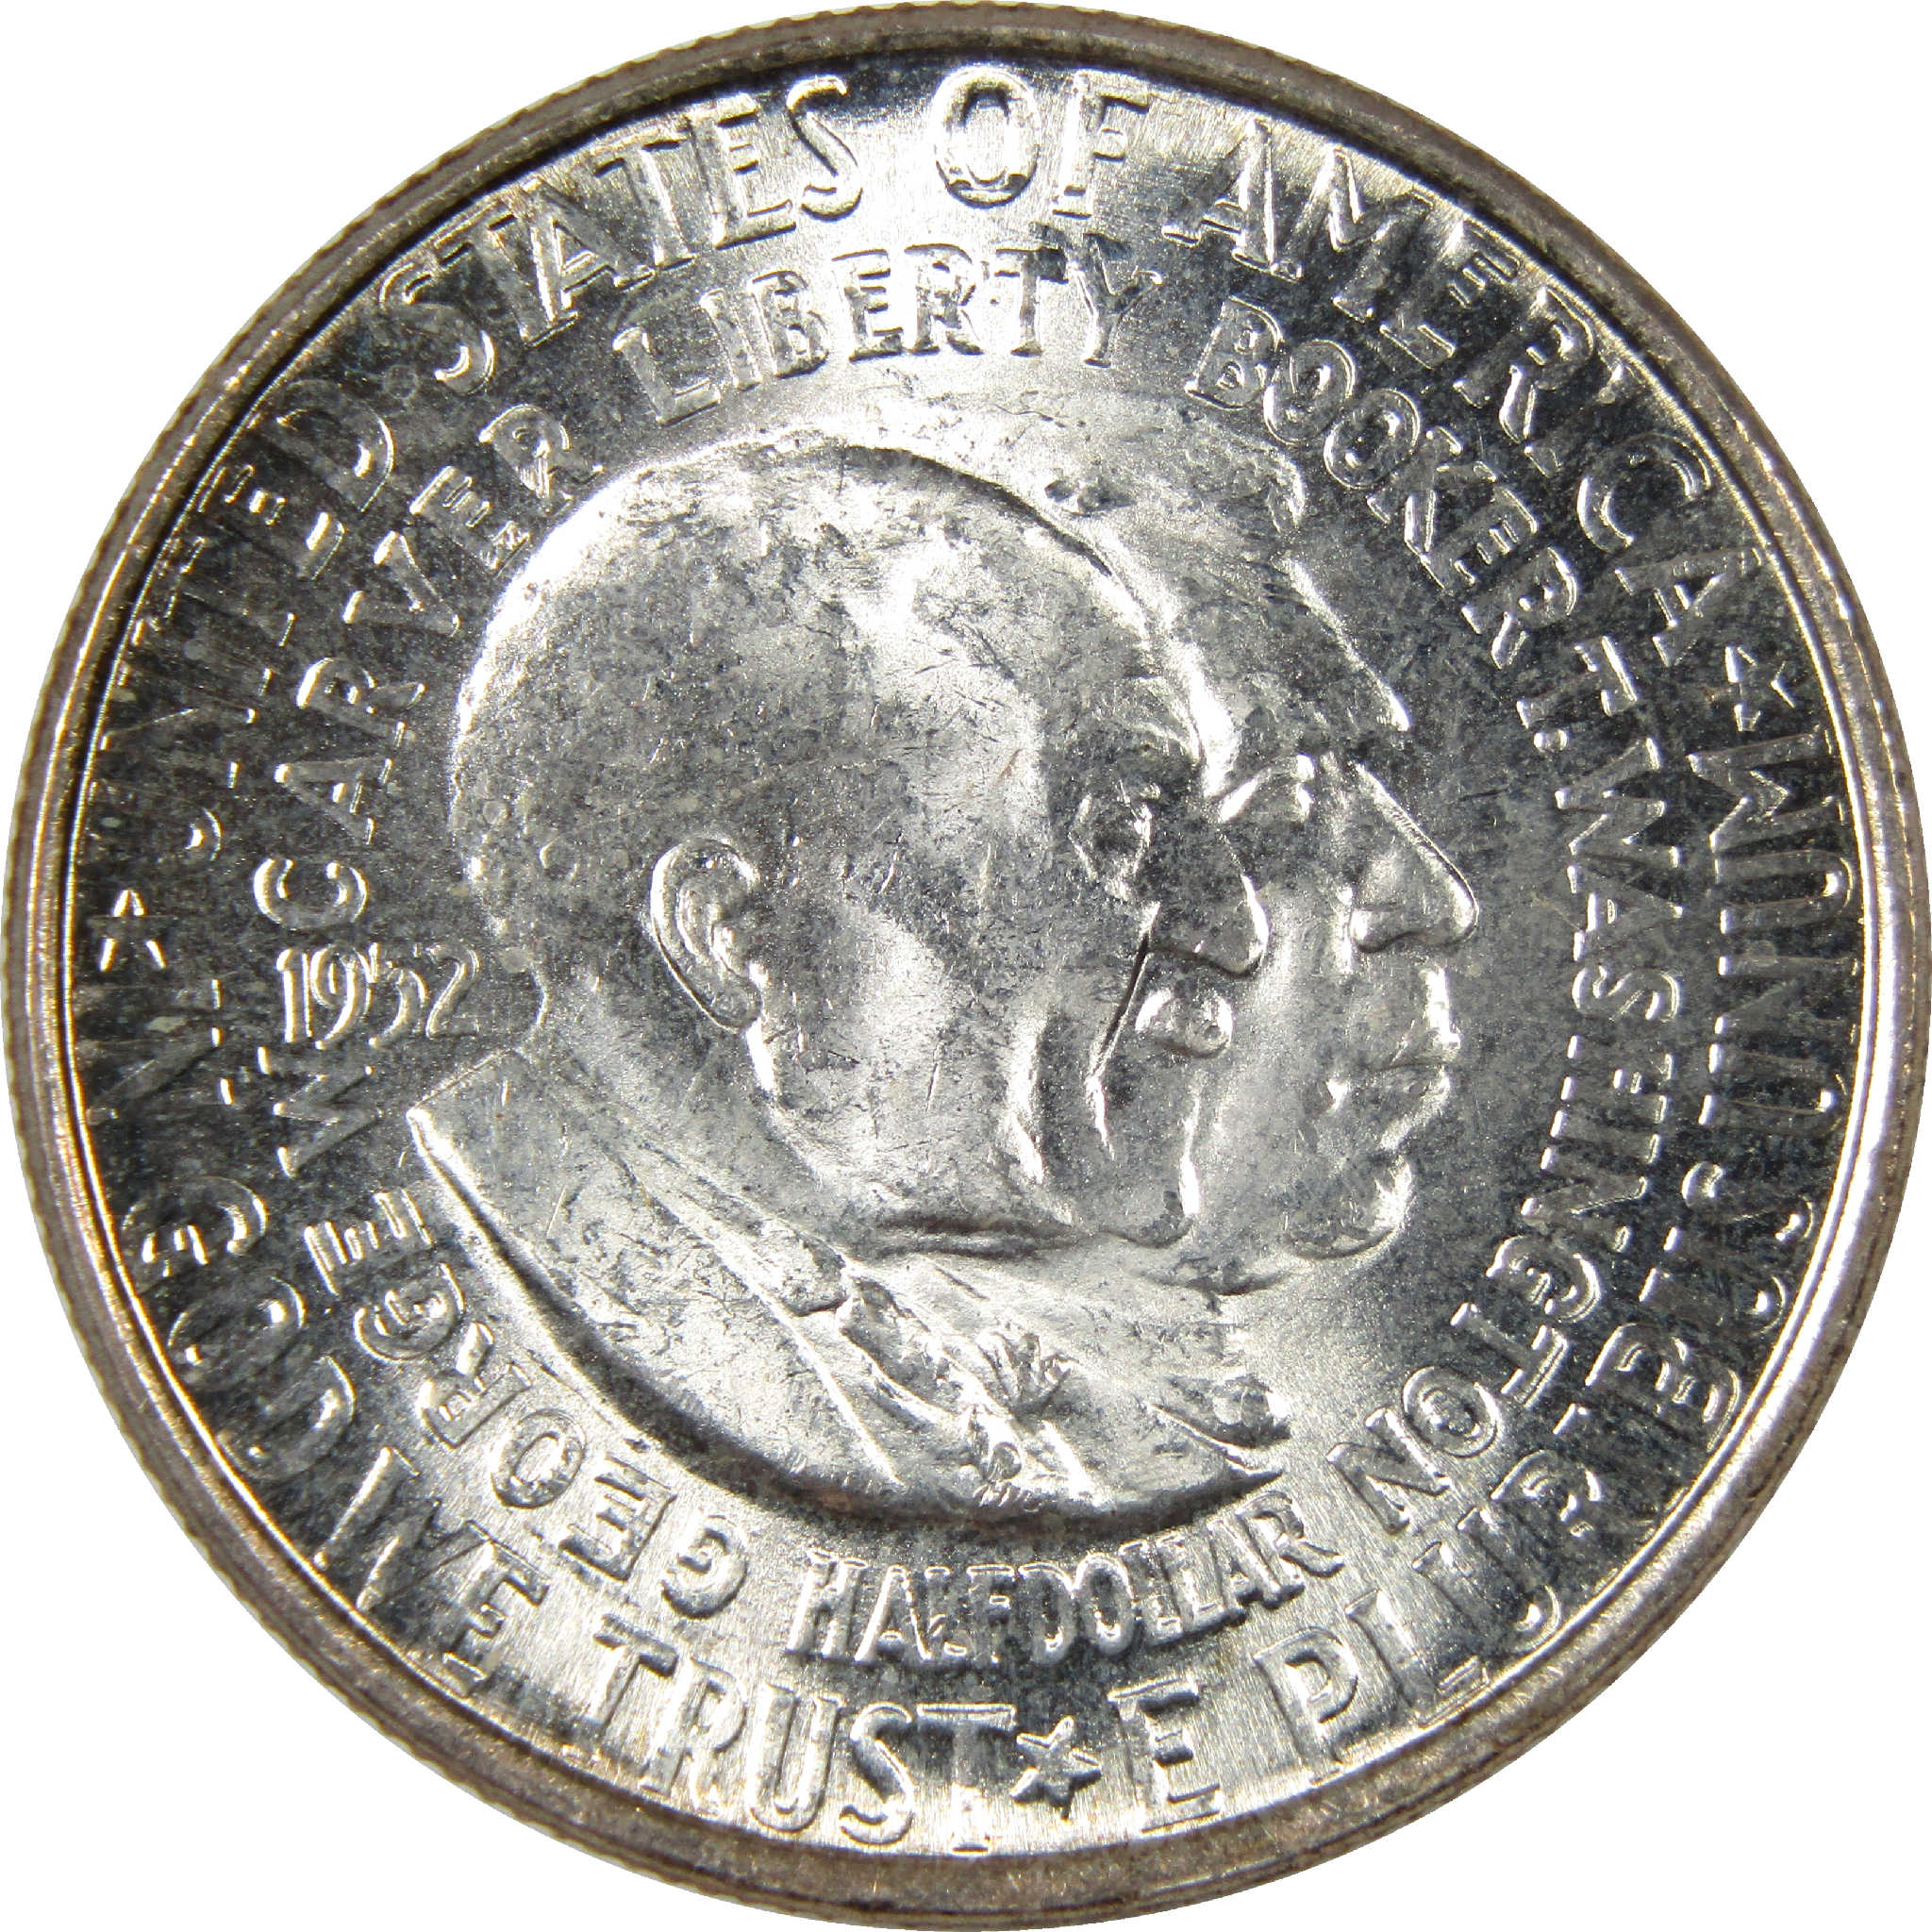 Washington-Carver Half Dollar 1952 Uncirculated Silver 50c Coin